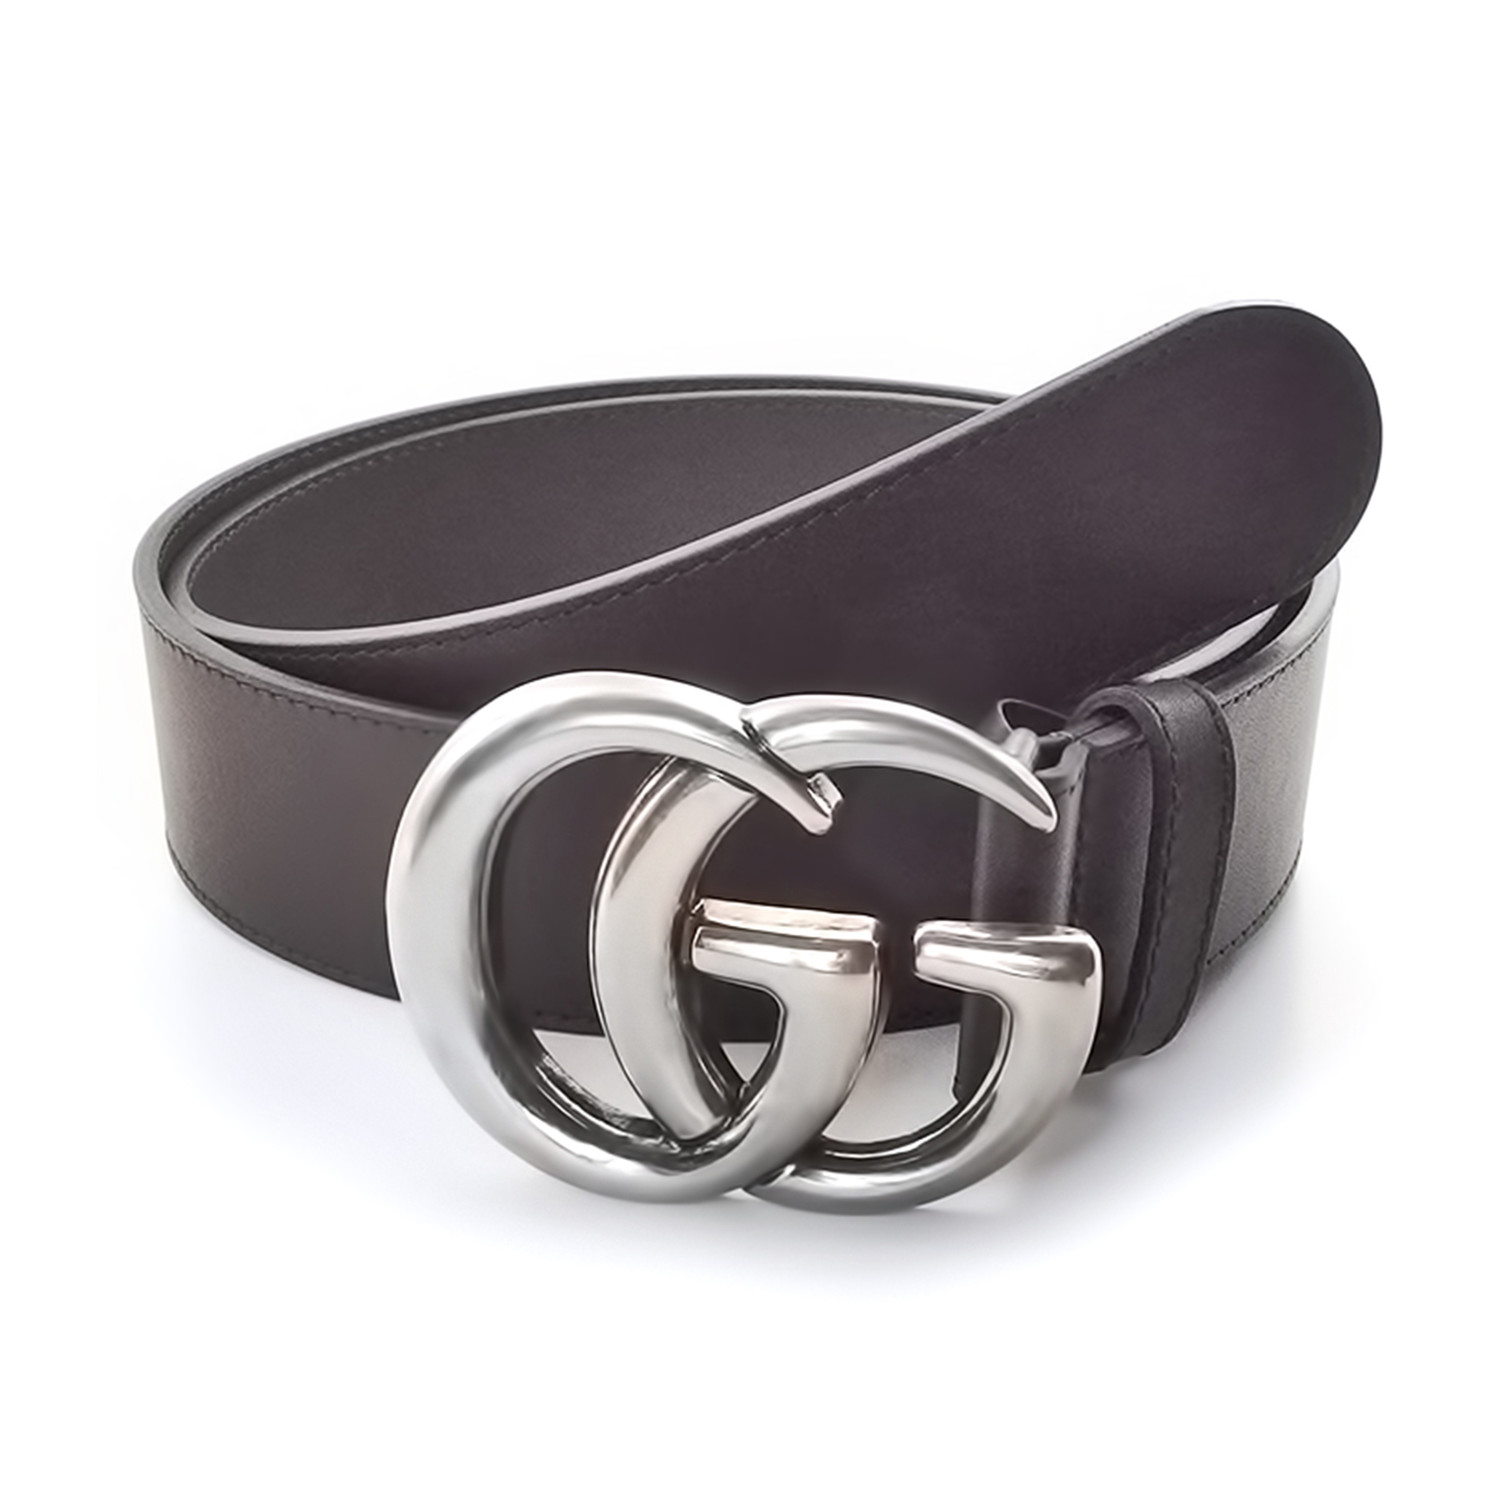 gucci belt silver logo